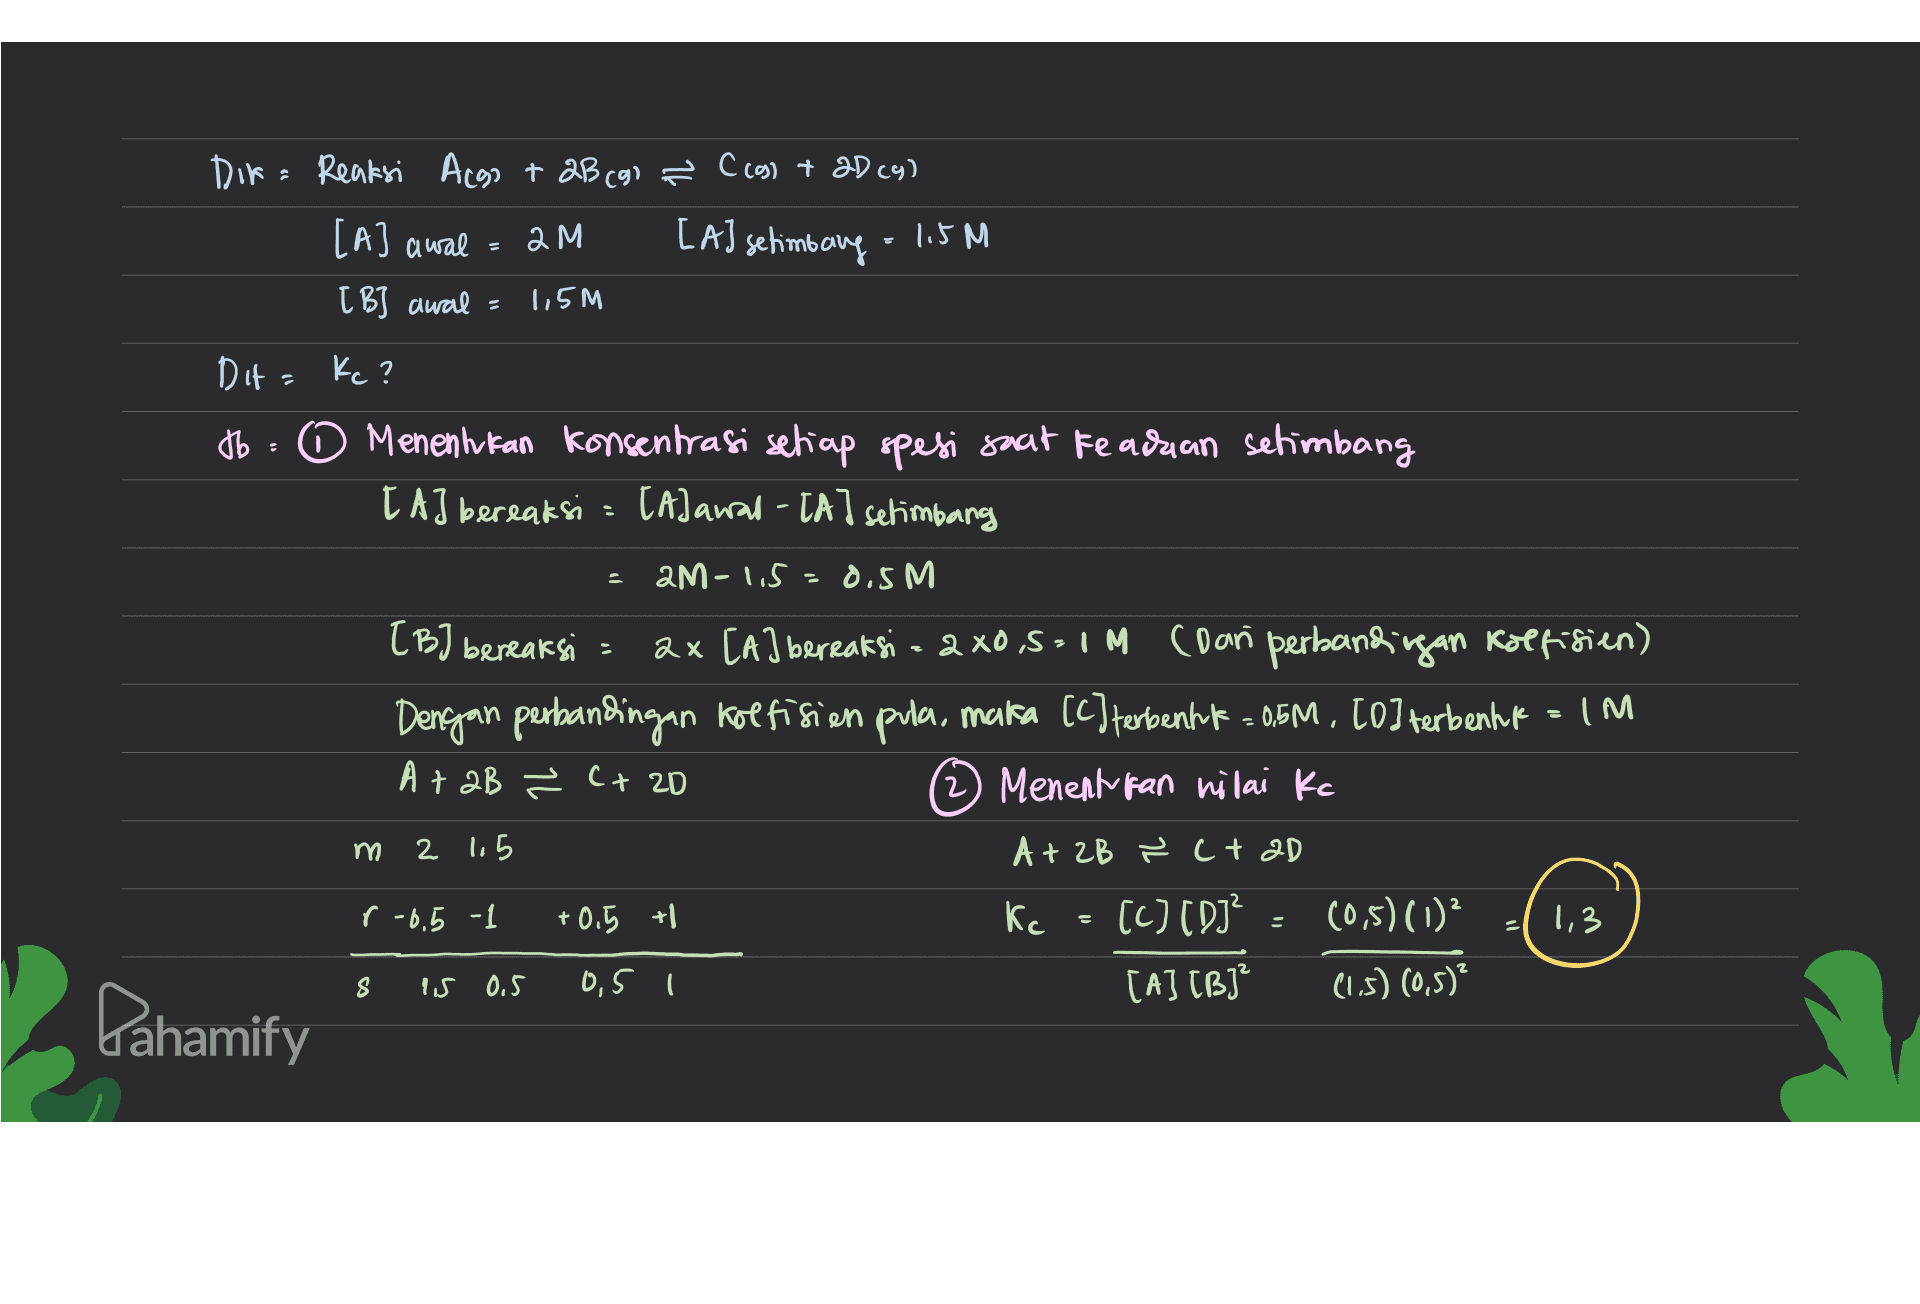 Dira Reaksi Acgo + 2B (91 ? Ccal + 2D (9) ам [A] setimbang - 115 M [ B] awal 1,5M [A] awal = Dit = Kc? tb : 0 Menentukan konsentrasi setiap spesi soat Feadaan setimbang [ A] bereaksi = [A]awal - [A] setimbang - 2M-1,5 0.5 M [B] bereaksi = 2x [A] bereaksi = 2x0,5=1M (Dan perbandingan Kolfisien) Dengan perbandingan koefisien pula, maka [C] terbentuk = 0,5M , [0] terbenhok = IM AtaB ² C + 2D (2) Menentukan nilai Kc 2 1.5 A + 2B řct aD r-6.5 -1 +0.5 tl Kc (C) (DJ? (0,5) (1)² 1,3 0,5 l [A] [B]² (1.5) (0,5)? 3 - S is 0.5 Dahamify 